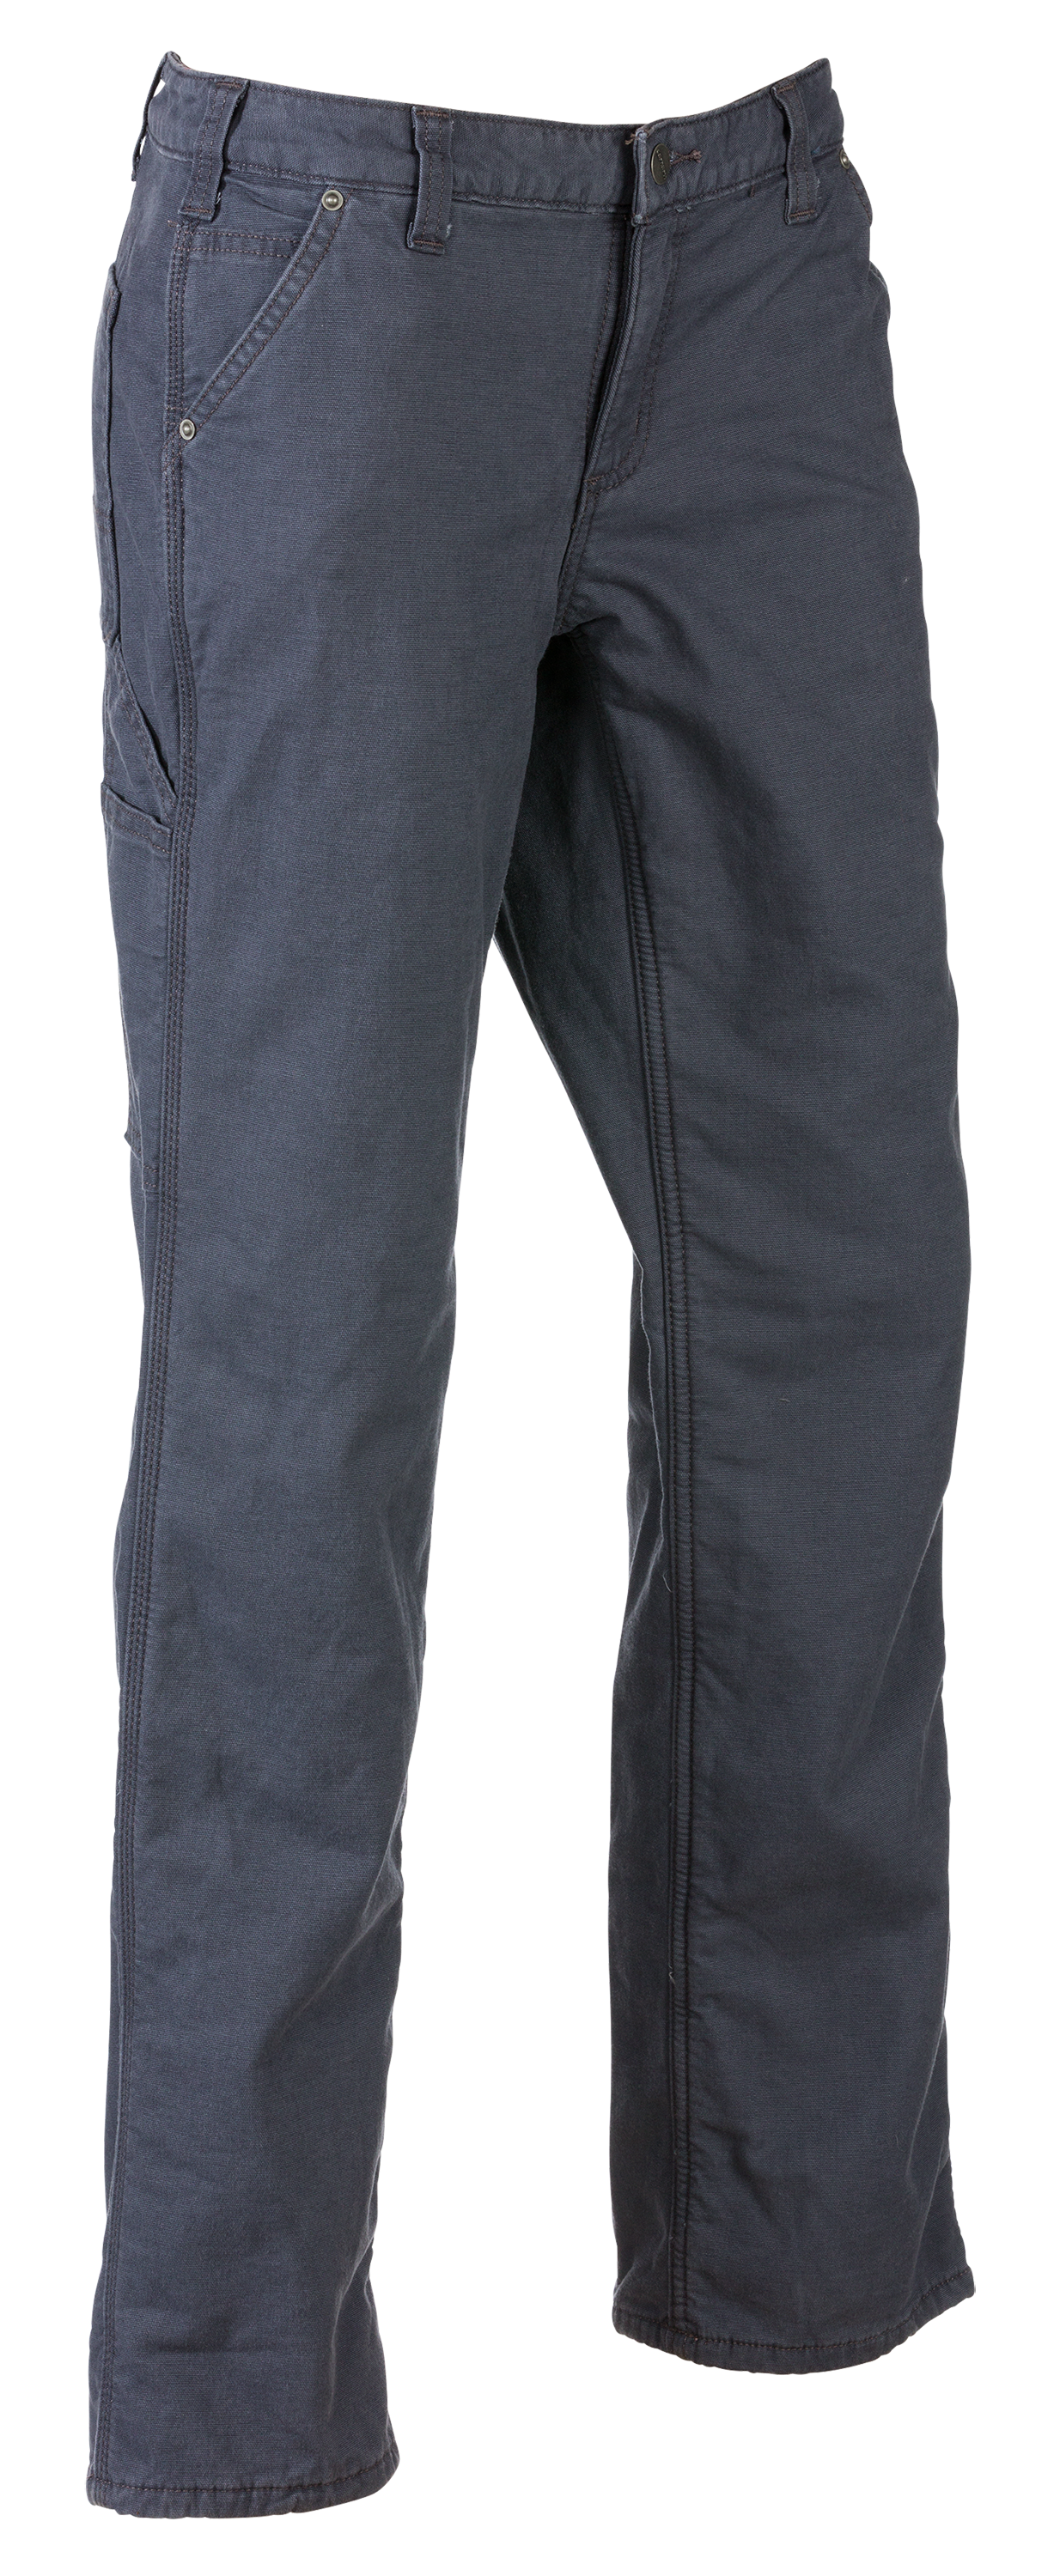 Carhartt Women's Original Fit Fleece Lined Crawford Cargo Pant